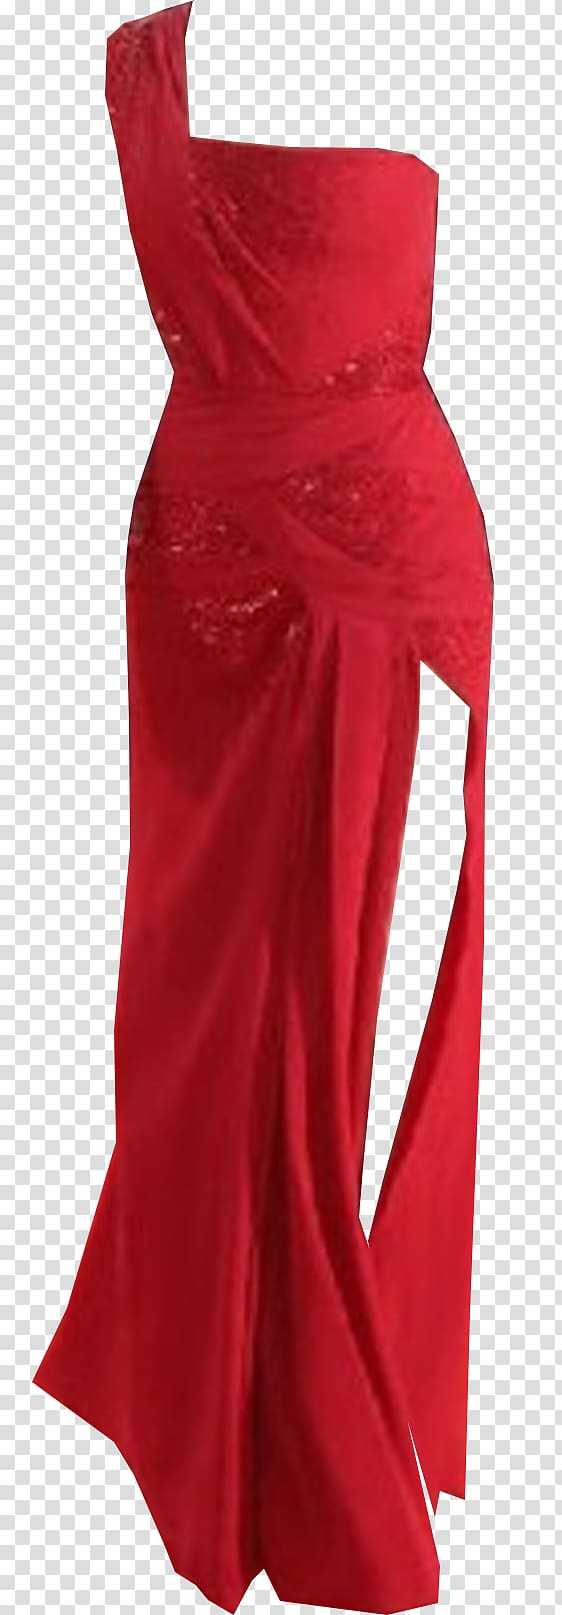 Cocktail dress Gown Velvet Fashion, red carpet transparent background PNG clipart